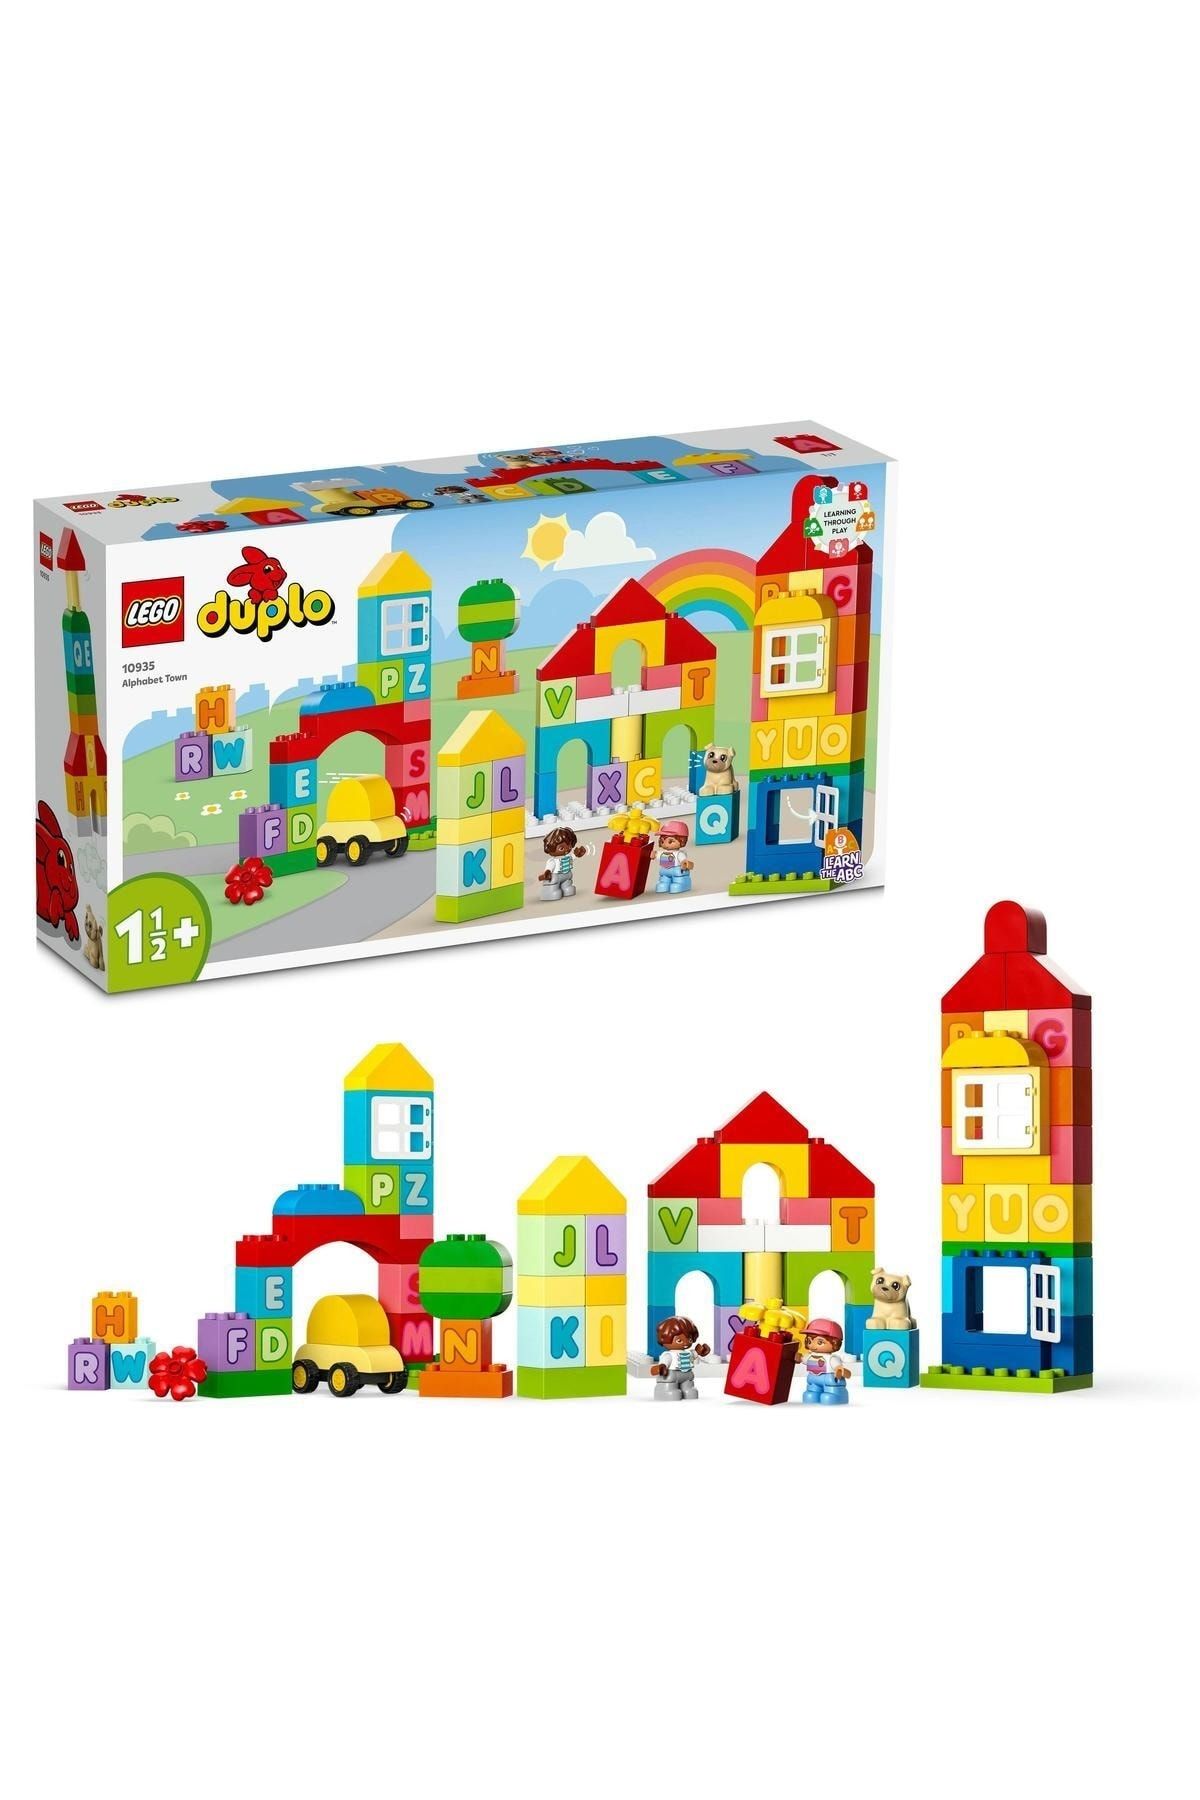 LEGO ® DUPLO® کلاسیک Alphabet Town 10935 - ست ساختمان اسباب بازی آموزشی برای پیش دبستانی (87 قطعه)